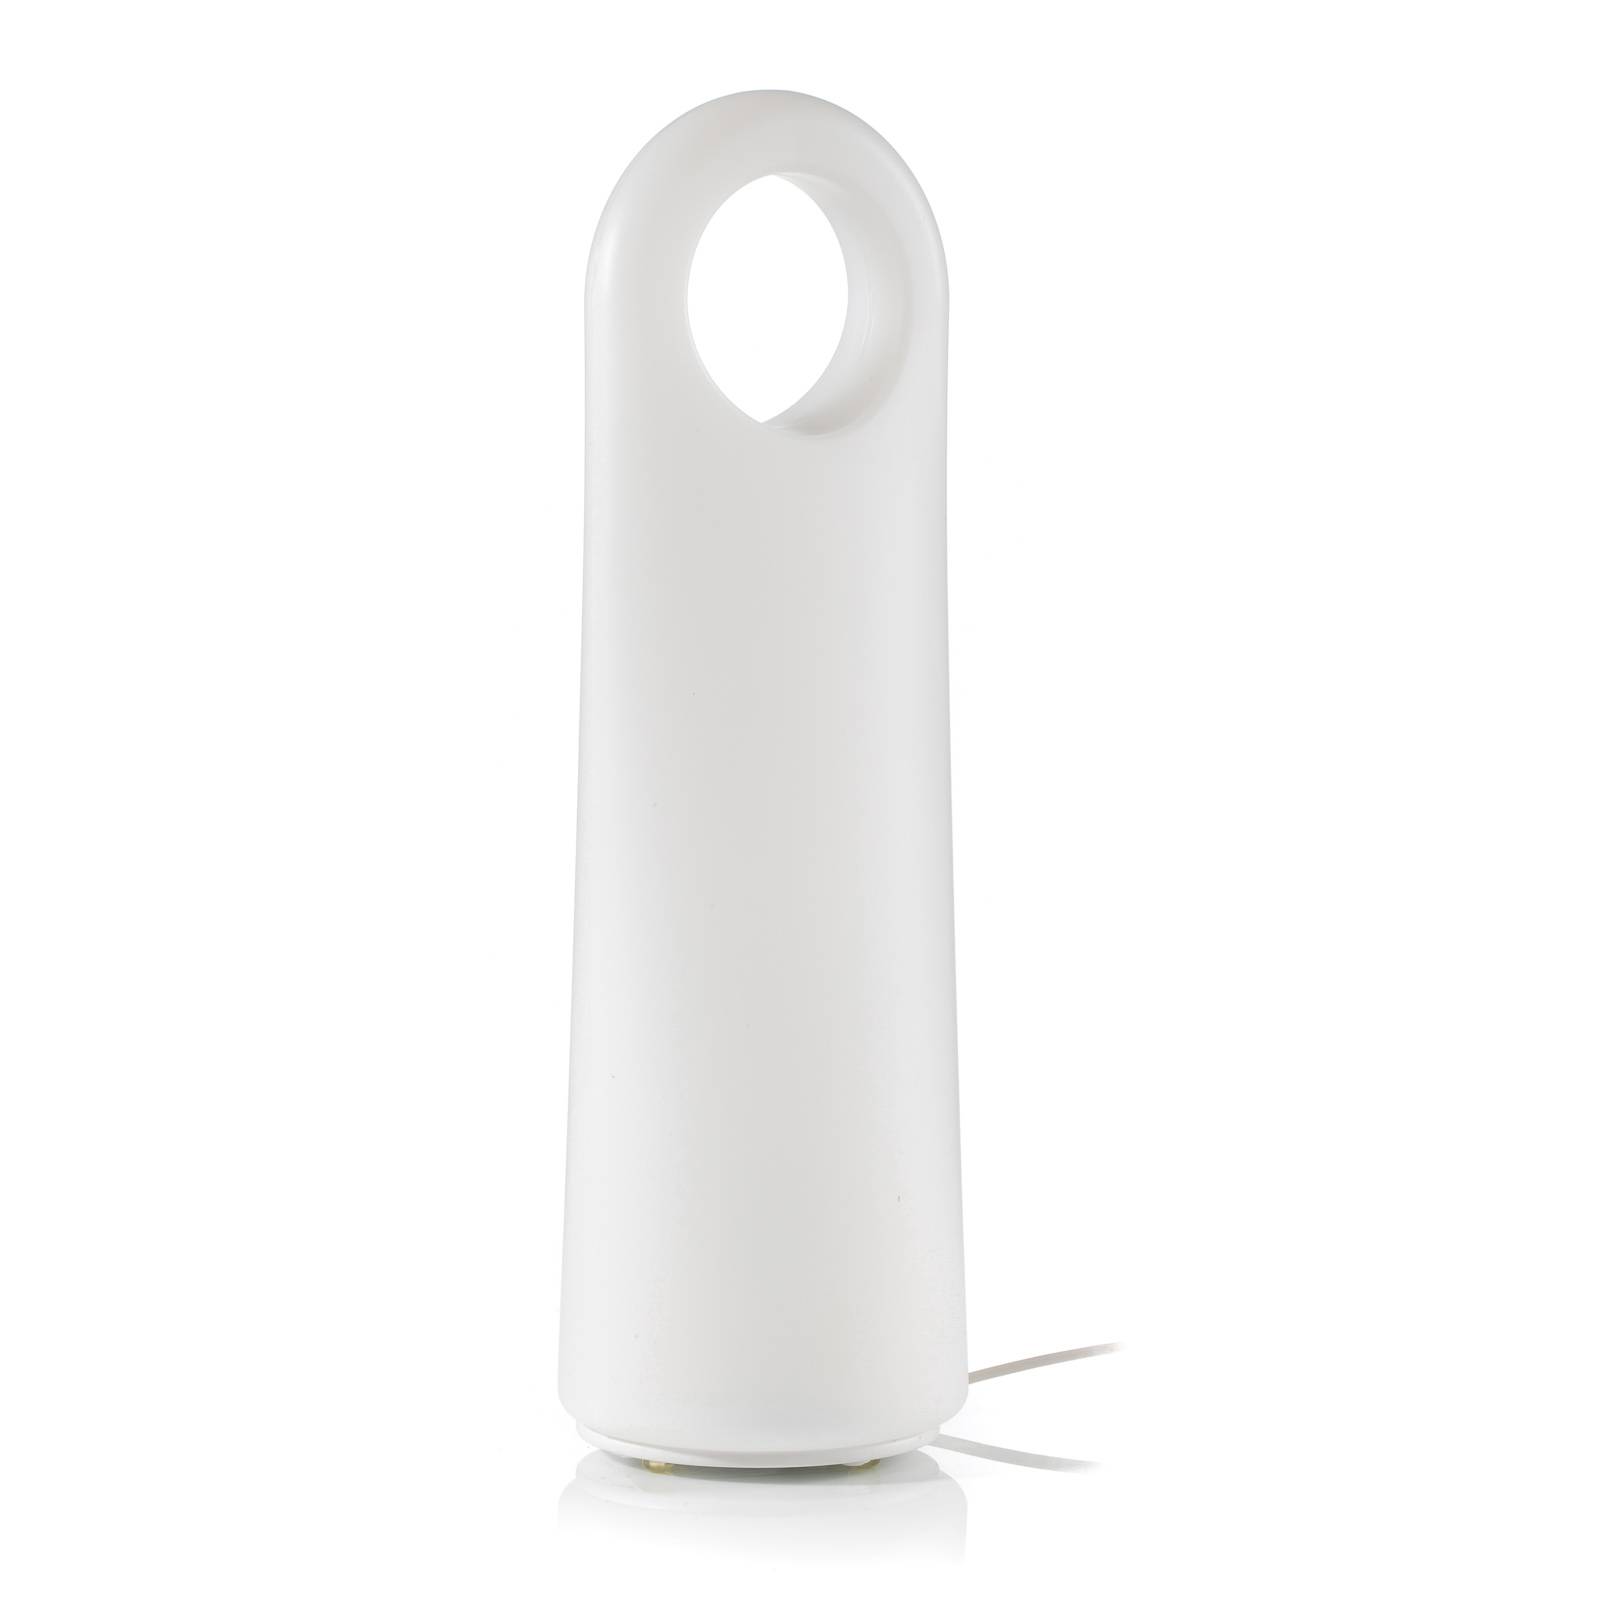 Image of Innolux Origo S lampe à poser de designer 6420611989633